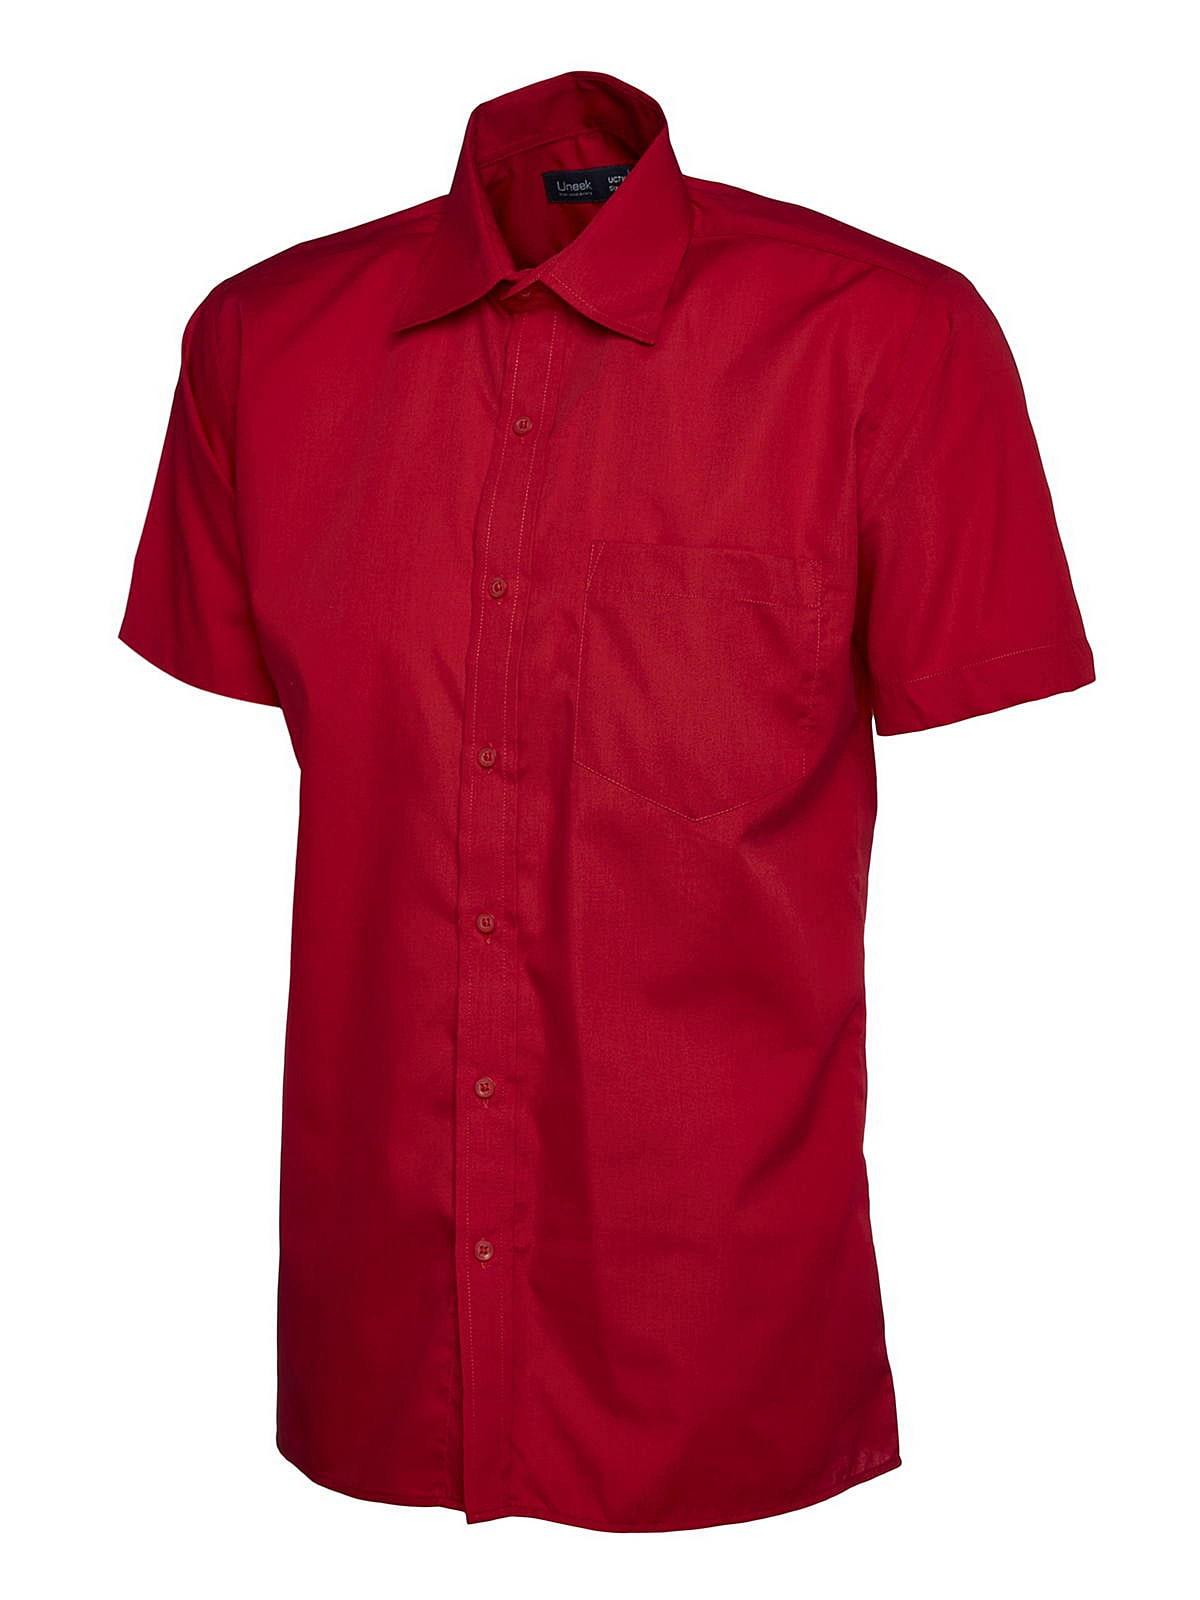 Uneek UC710 ? Mens Poplin Half Sleeve Shirt in Red (Product Code: UC710)